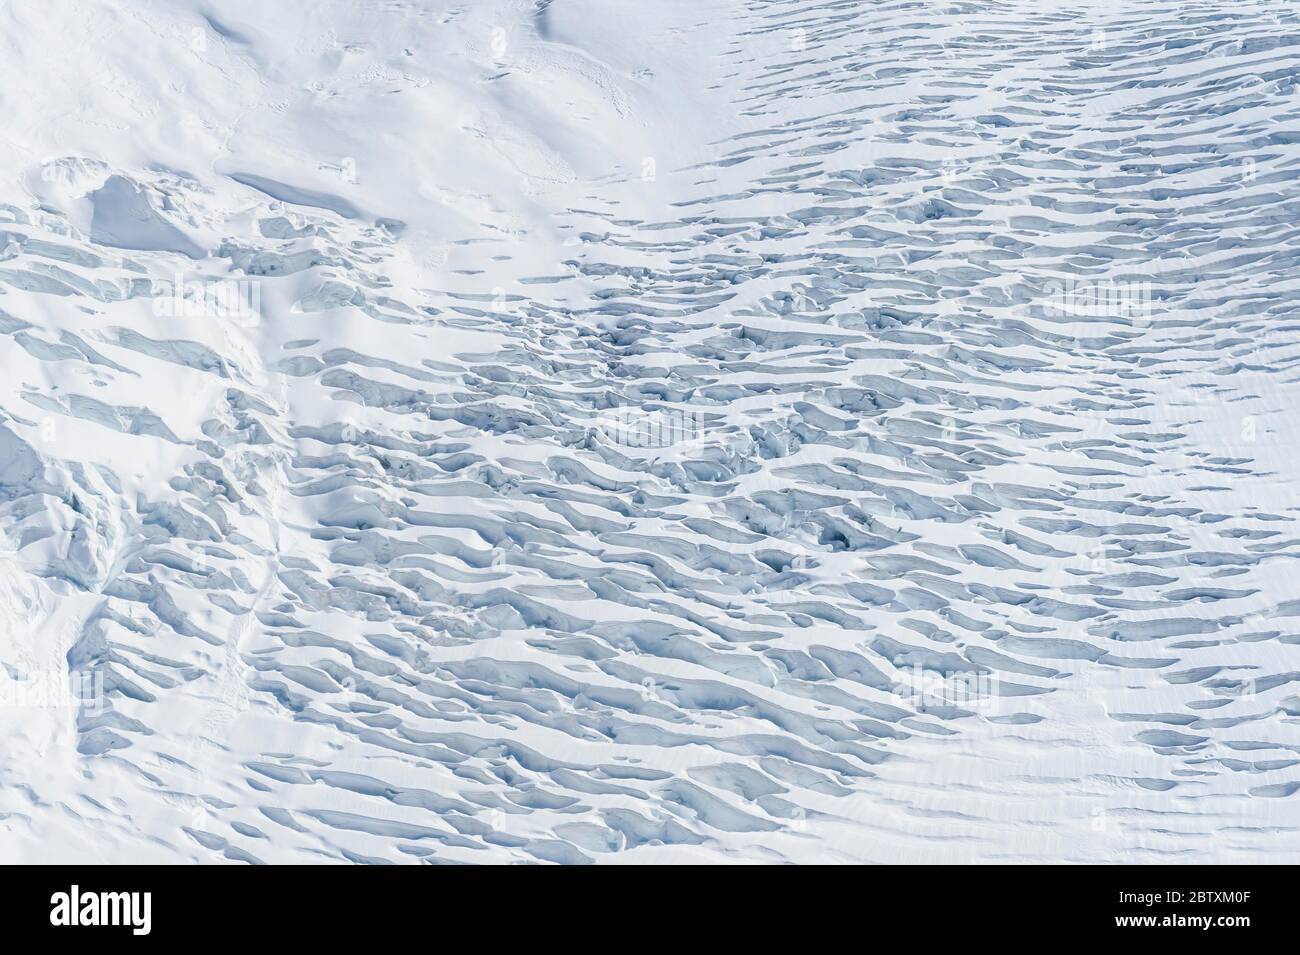 Vista aerea, campo di ghiaccio con crepacci longitudinali, Mt. Cook Glacier, Mount Cook National Park, Canterbury regione, Nuova Zelanda Foto Stock